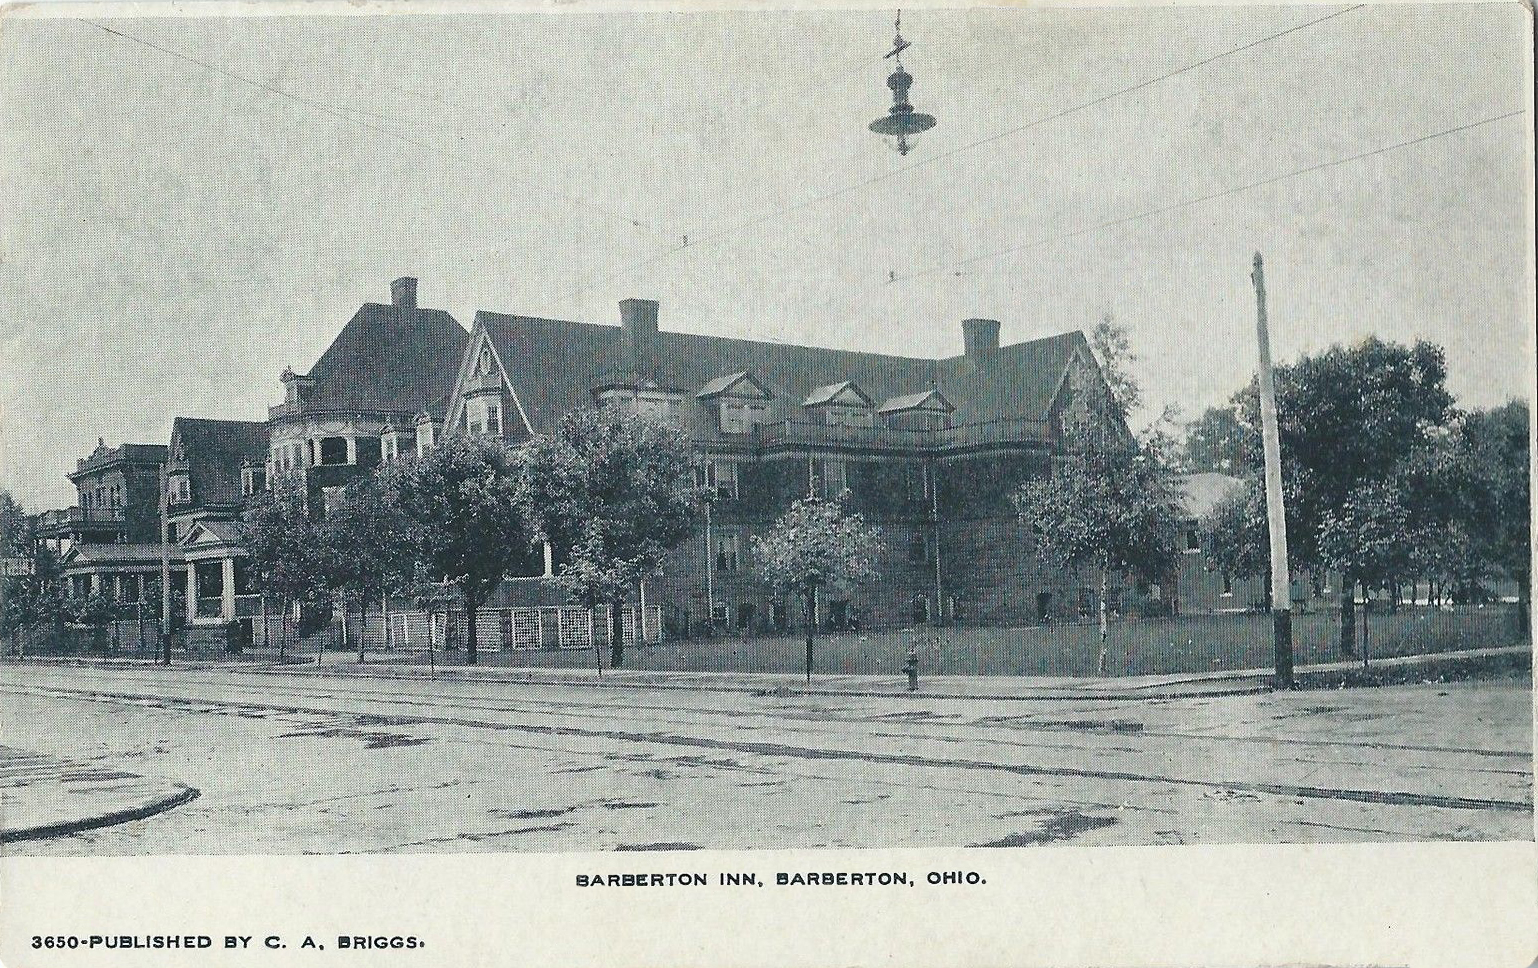 Barberton Inn